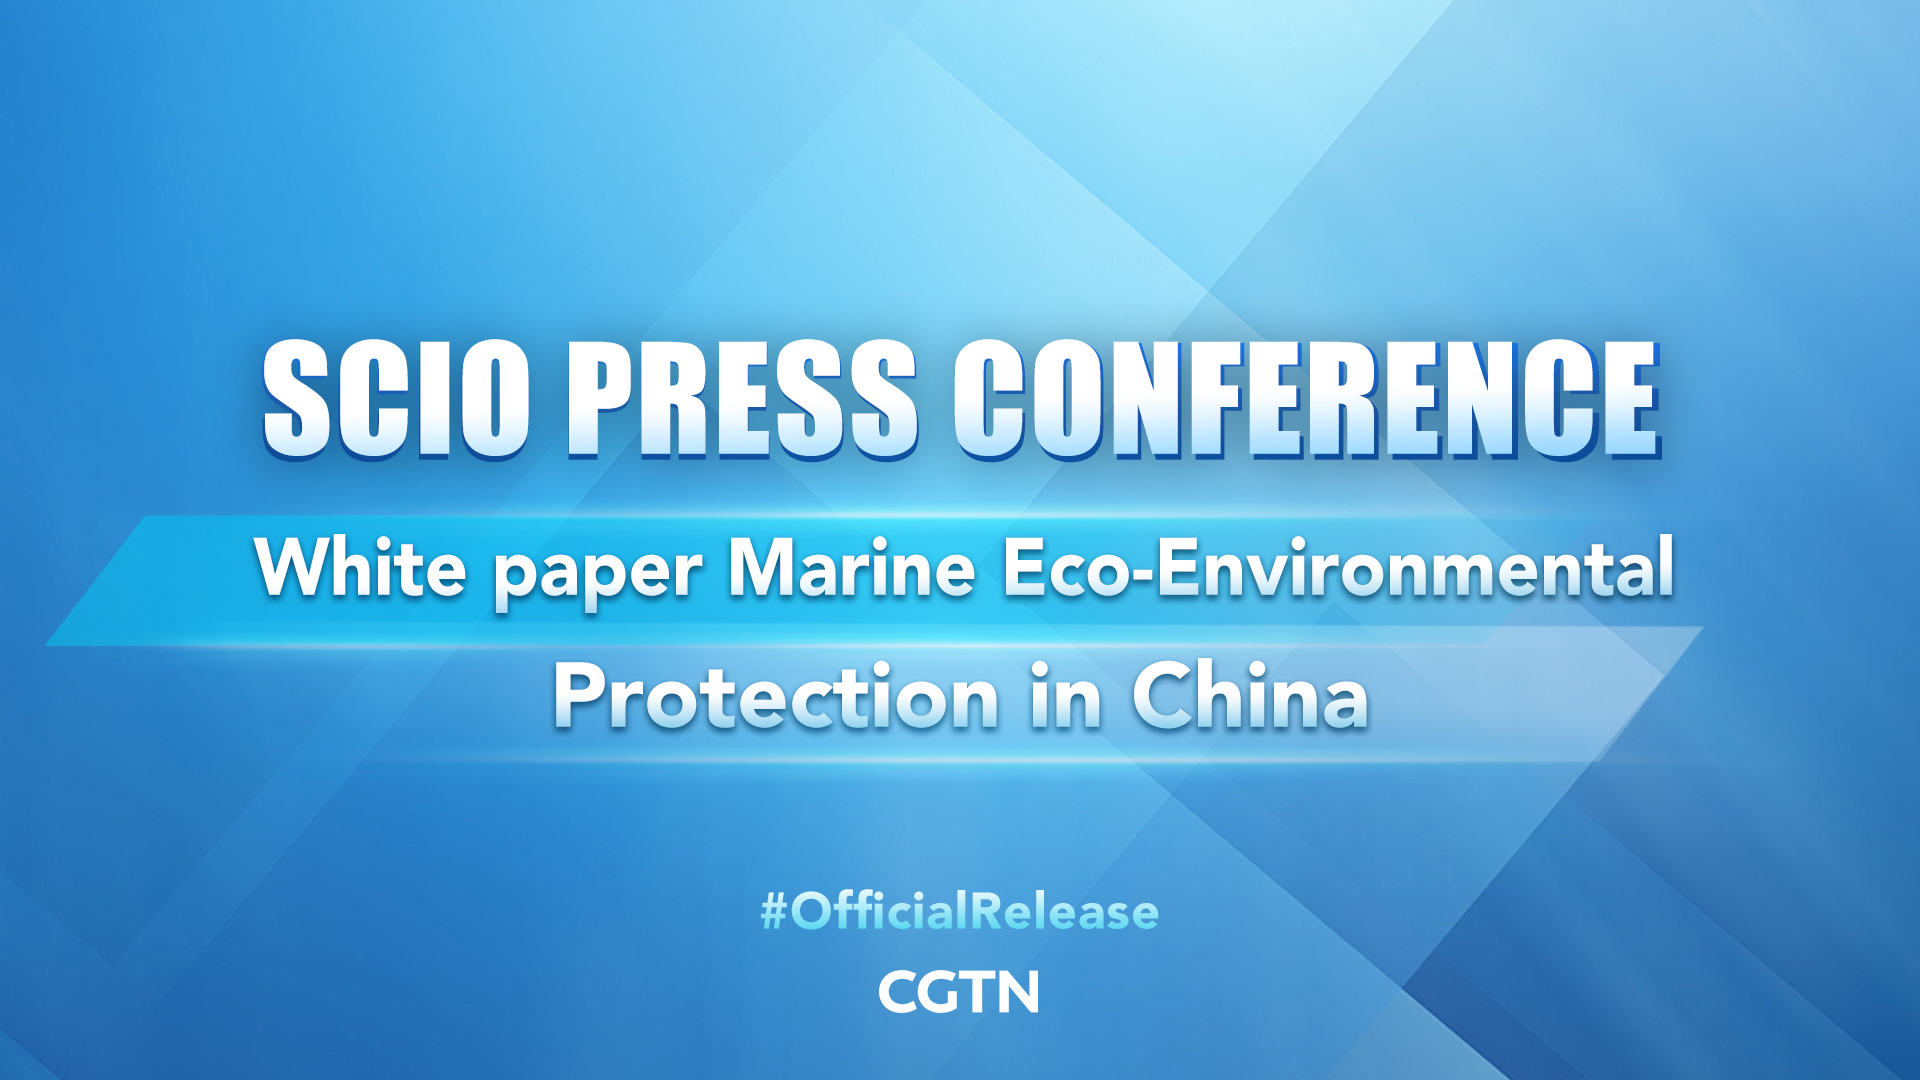 Live: SCIO briefs media on white paper Marine Eco-Environmental Protection in China